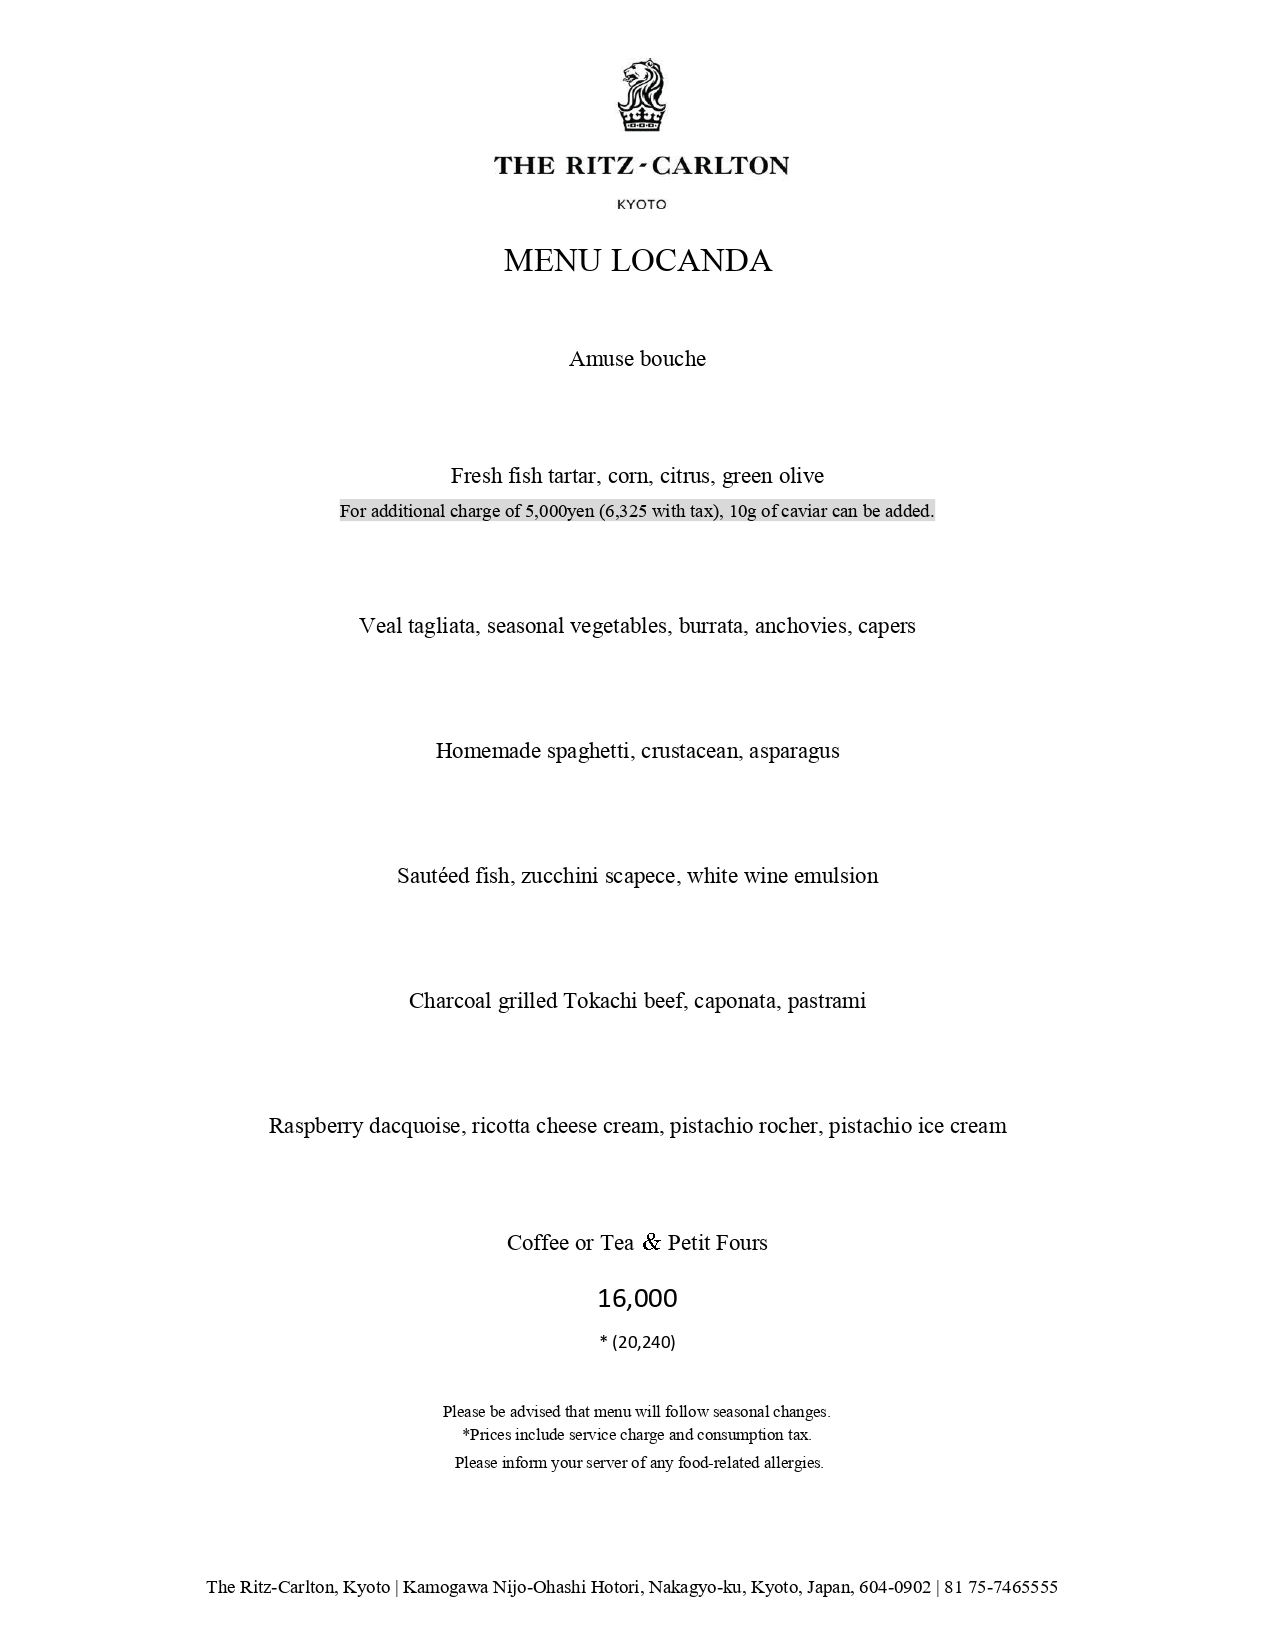 La Locanda dinner menu second page.